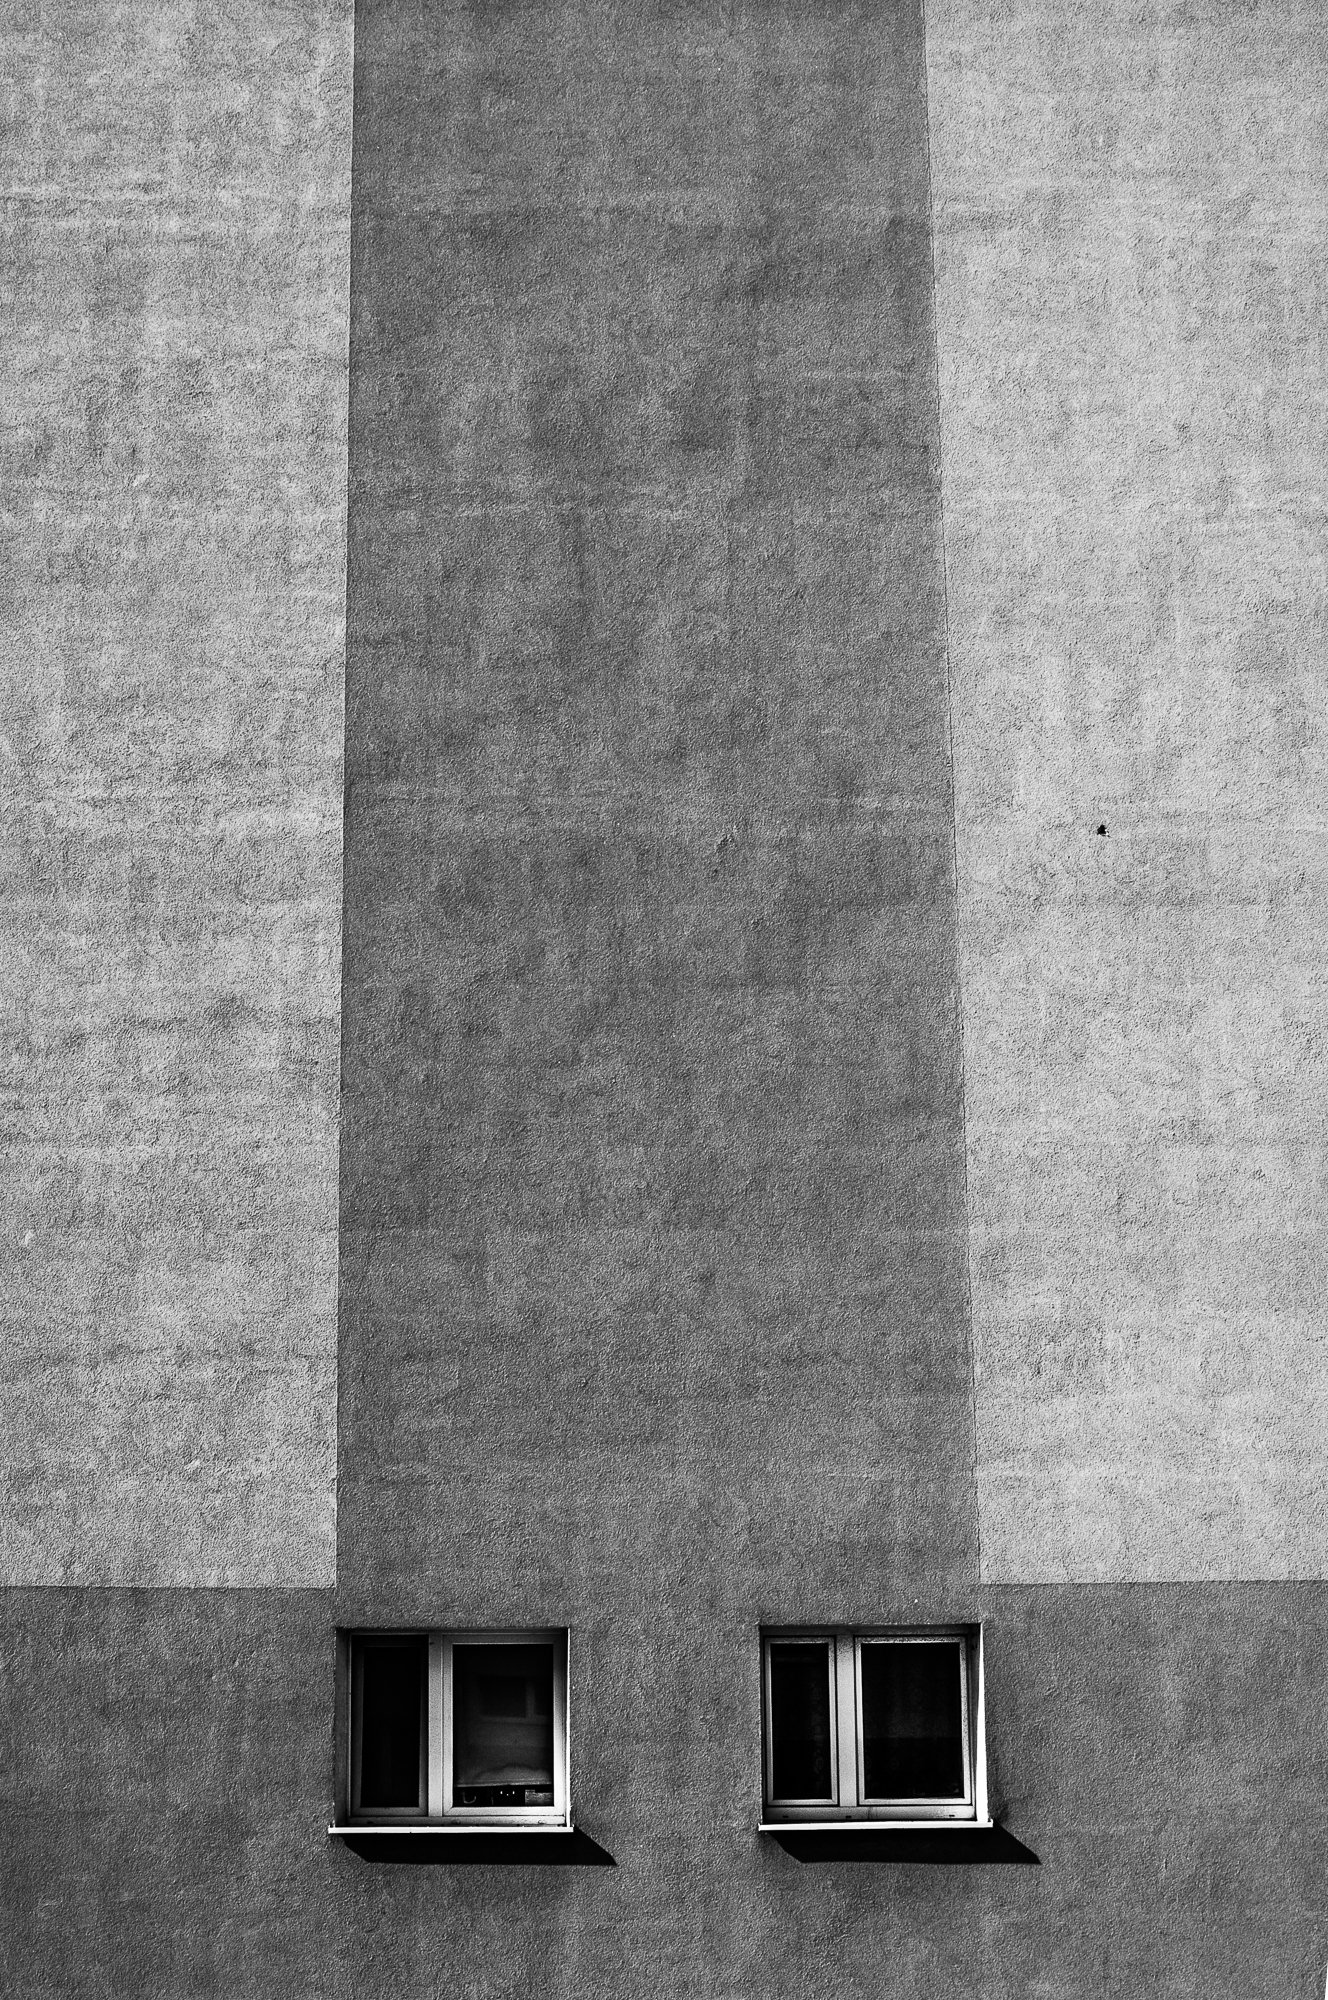 Adam Mazek Photography. Warsaw 2017. Perspective. Minimalism. The Wall.